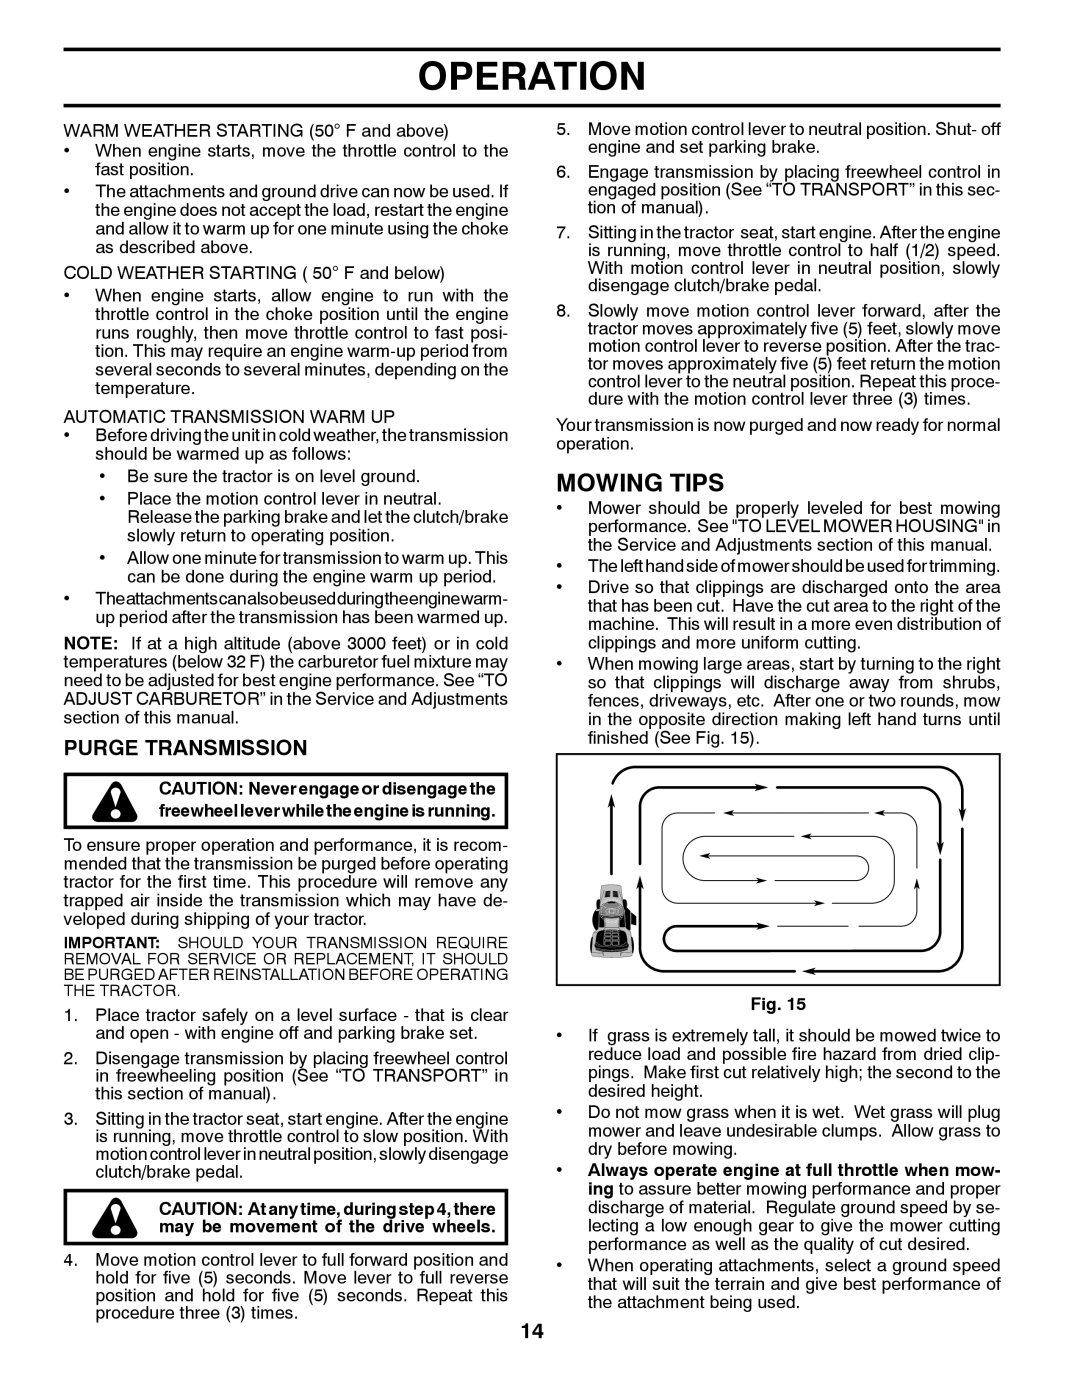 Poulan XT195H42LT manual Mowing Tips, Operation, Purge Transmission 